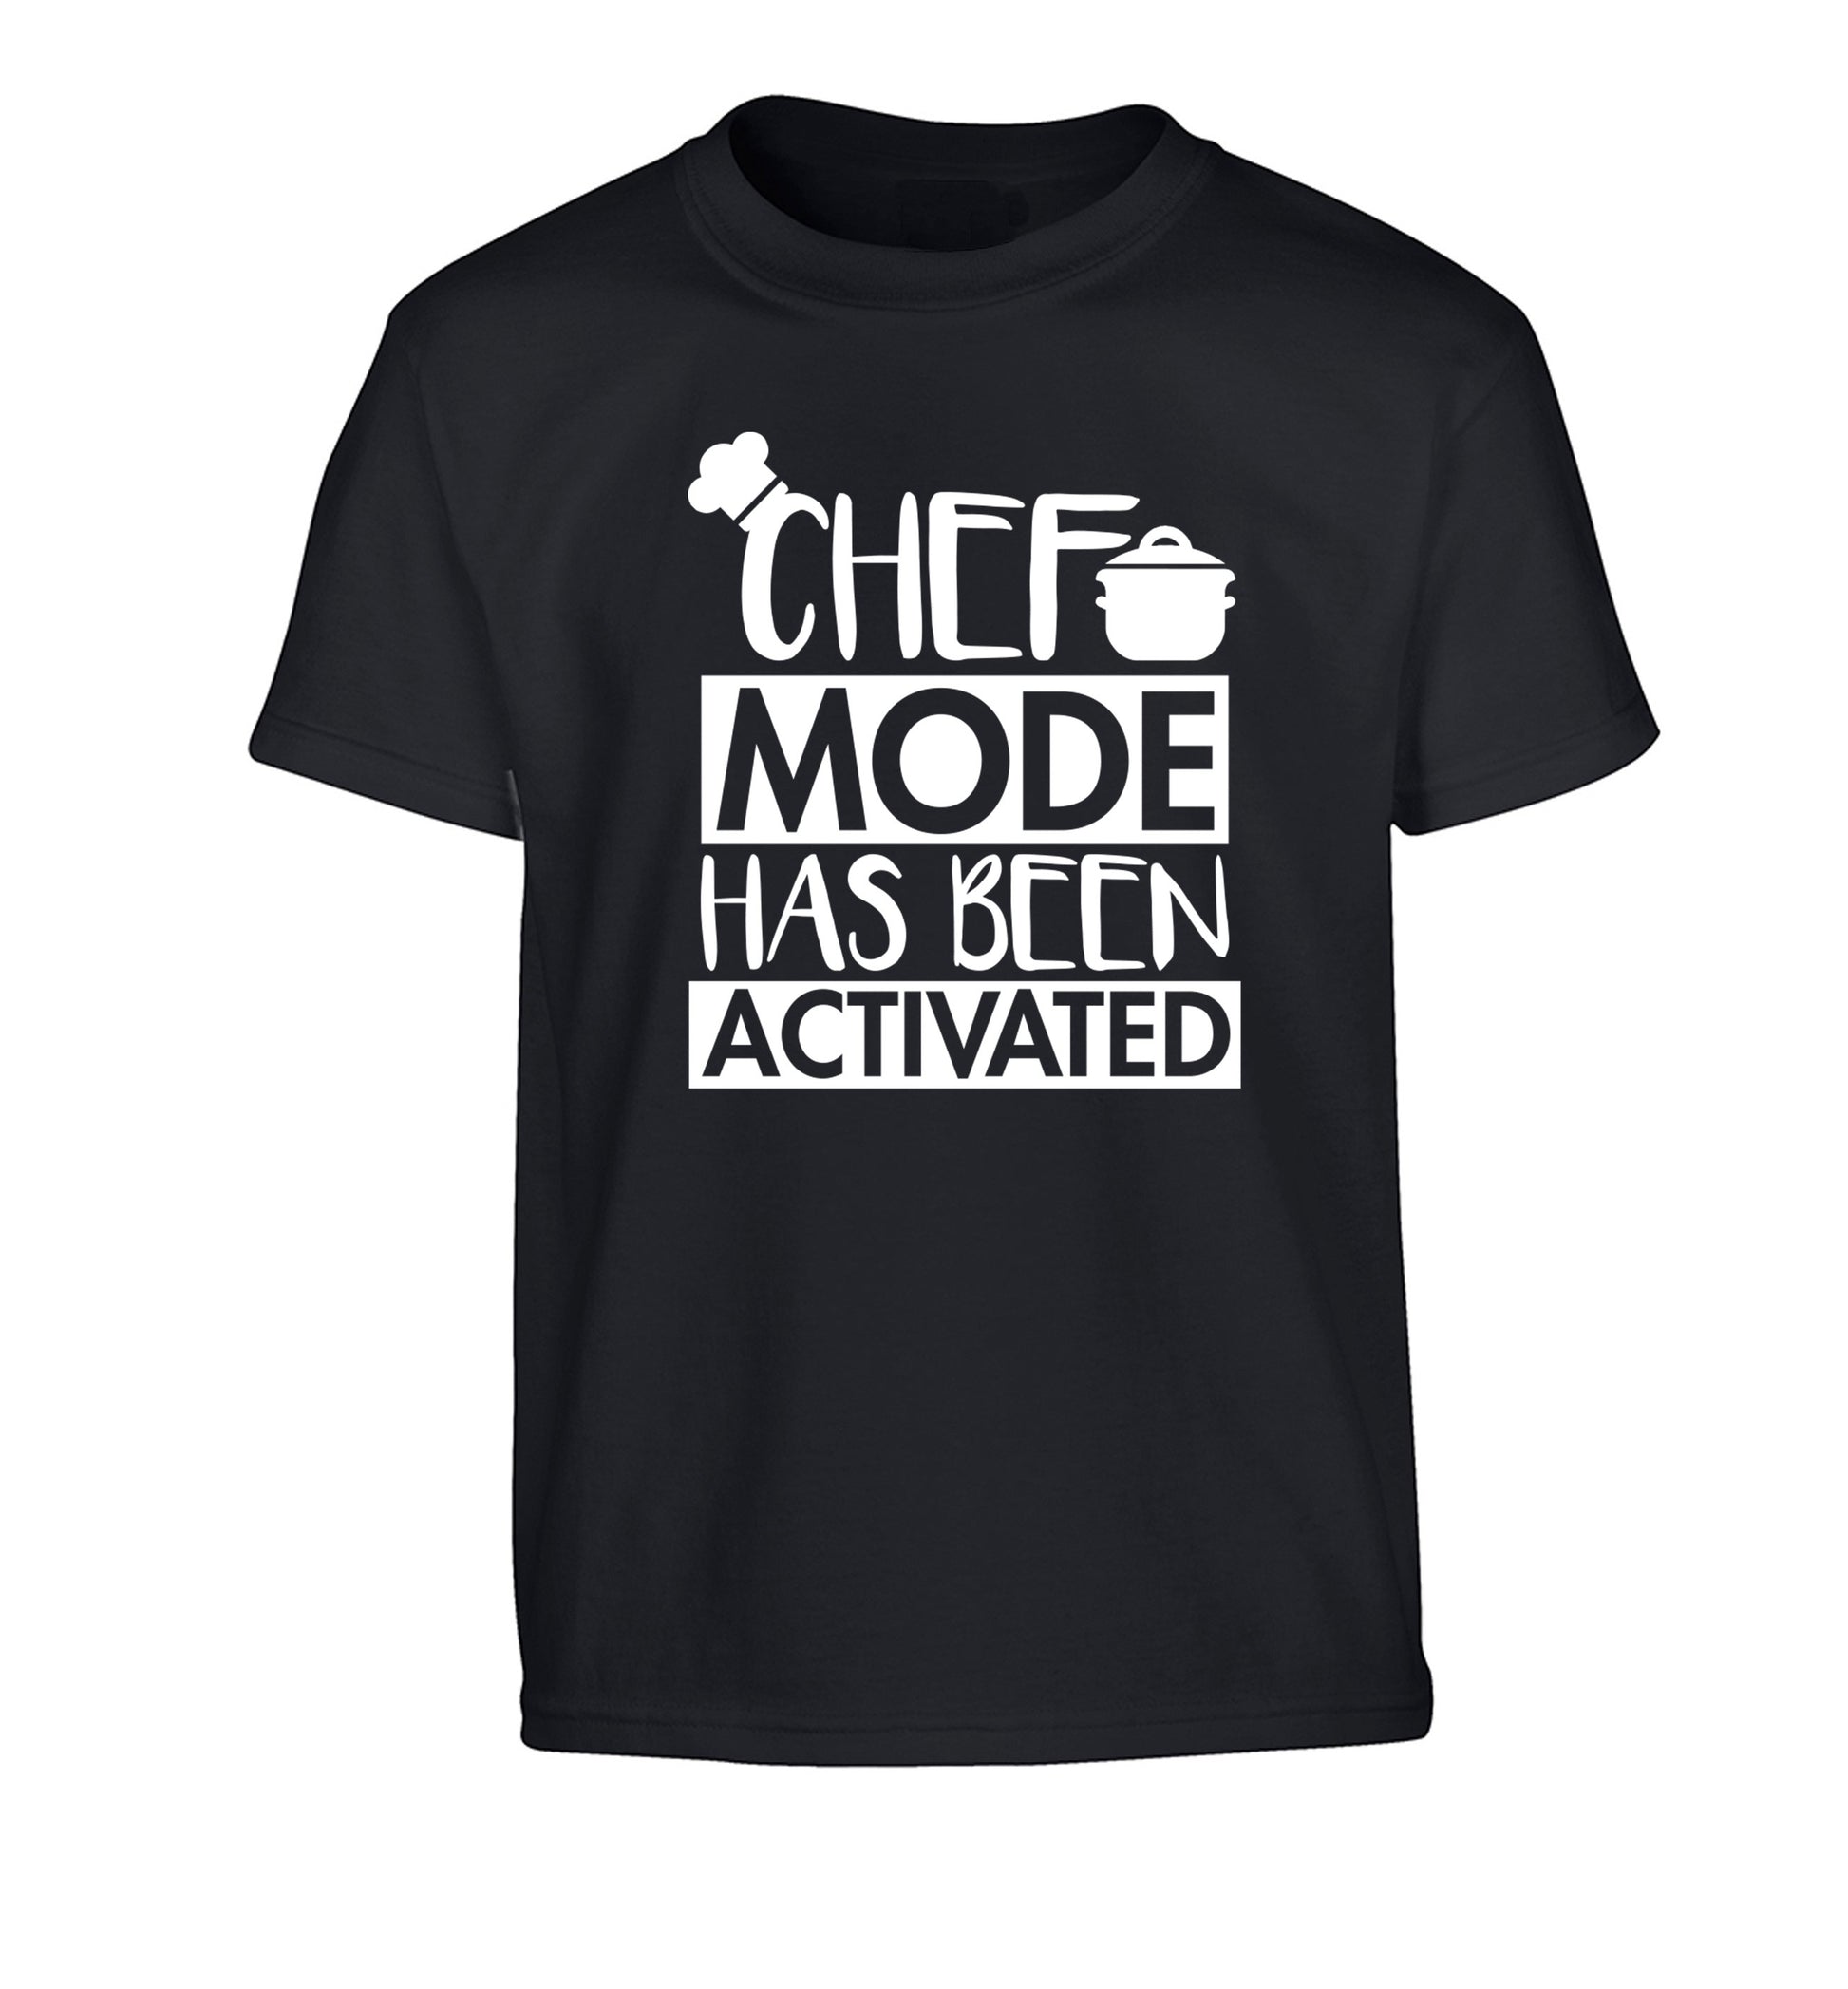 Chef mode has been activated Children's black Tshirt 12-14 Years